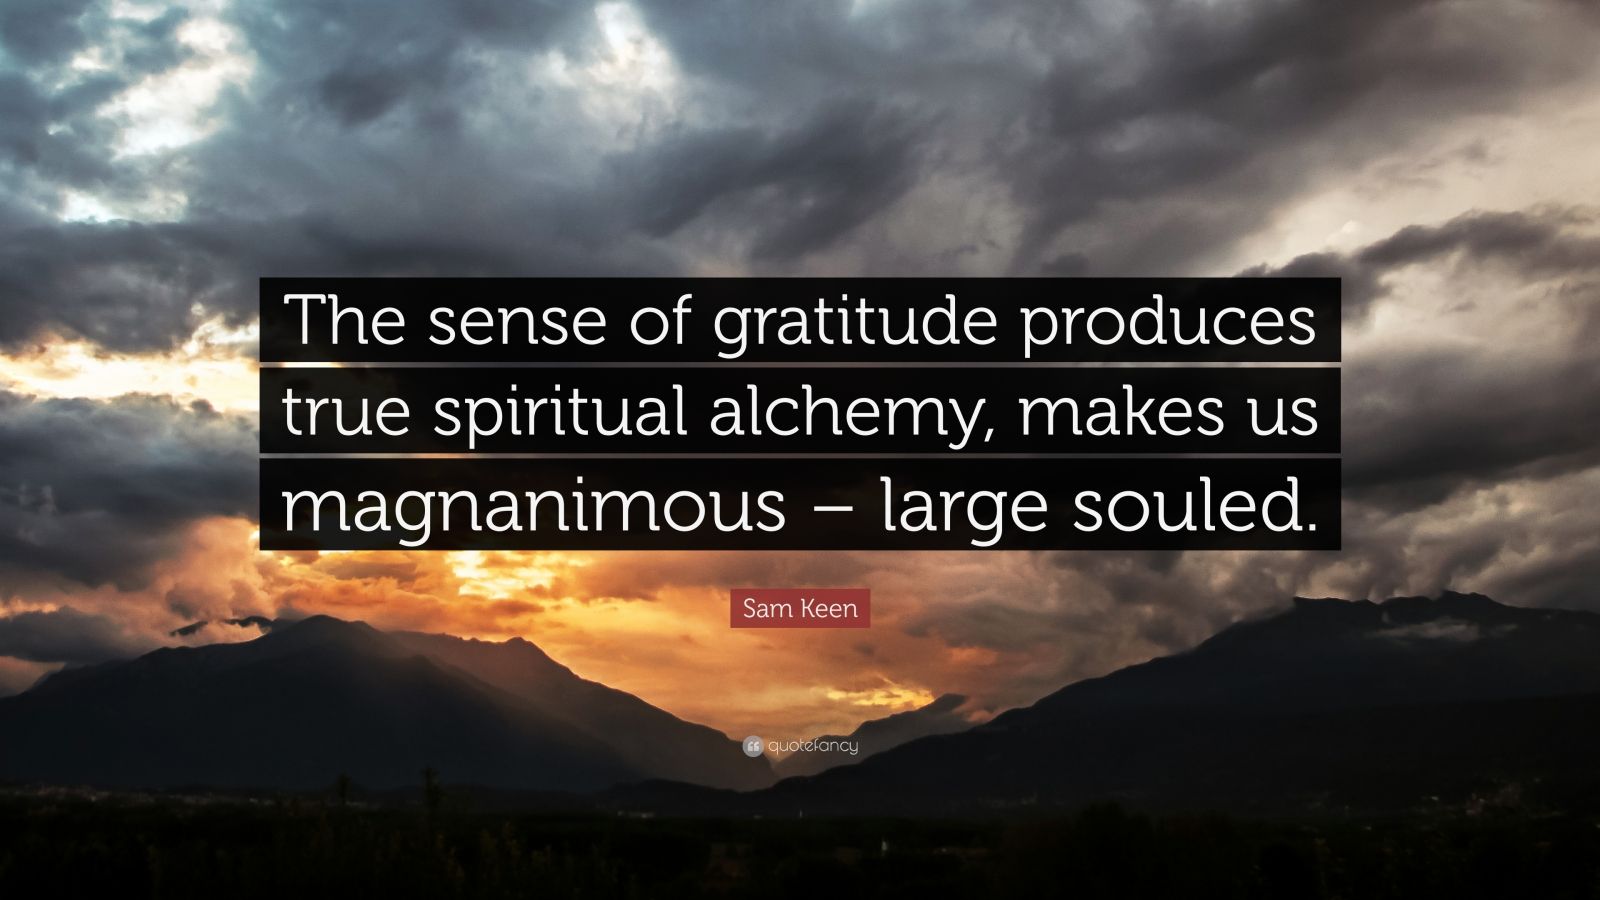 Sam Keen Quote: "The sense of gratitude produces true spiritual alchemy, makes us magnanimous ...